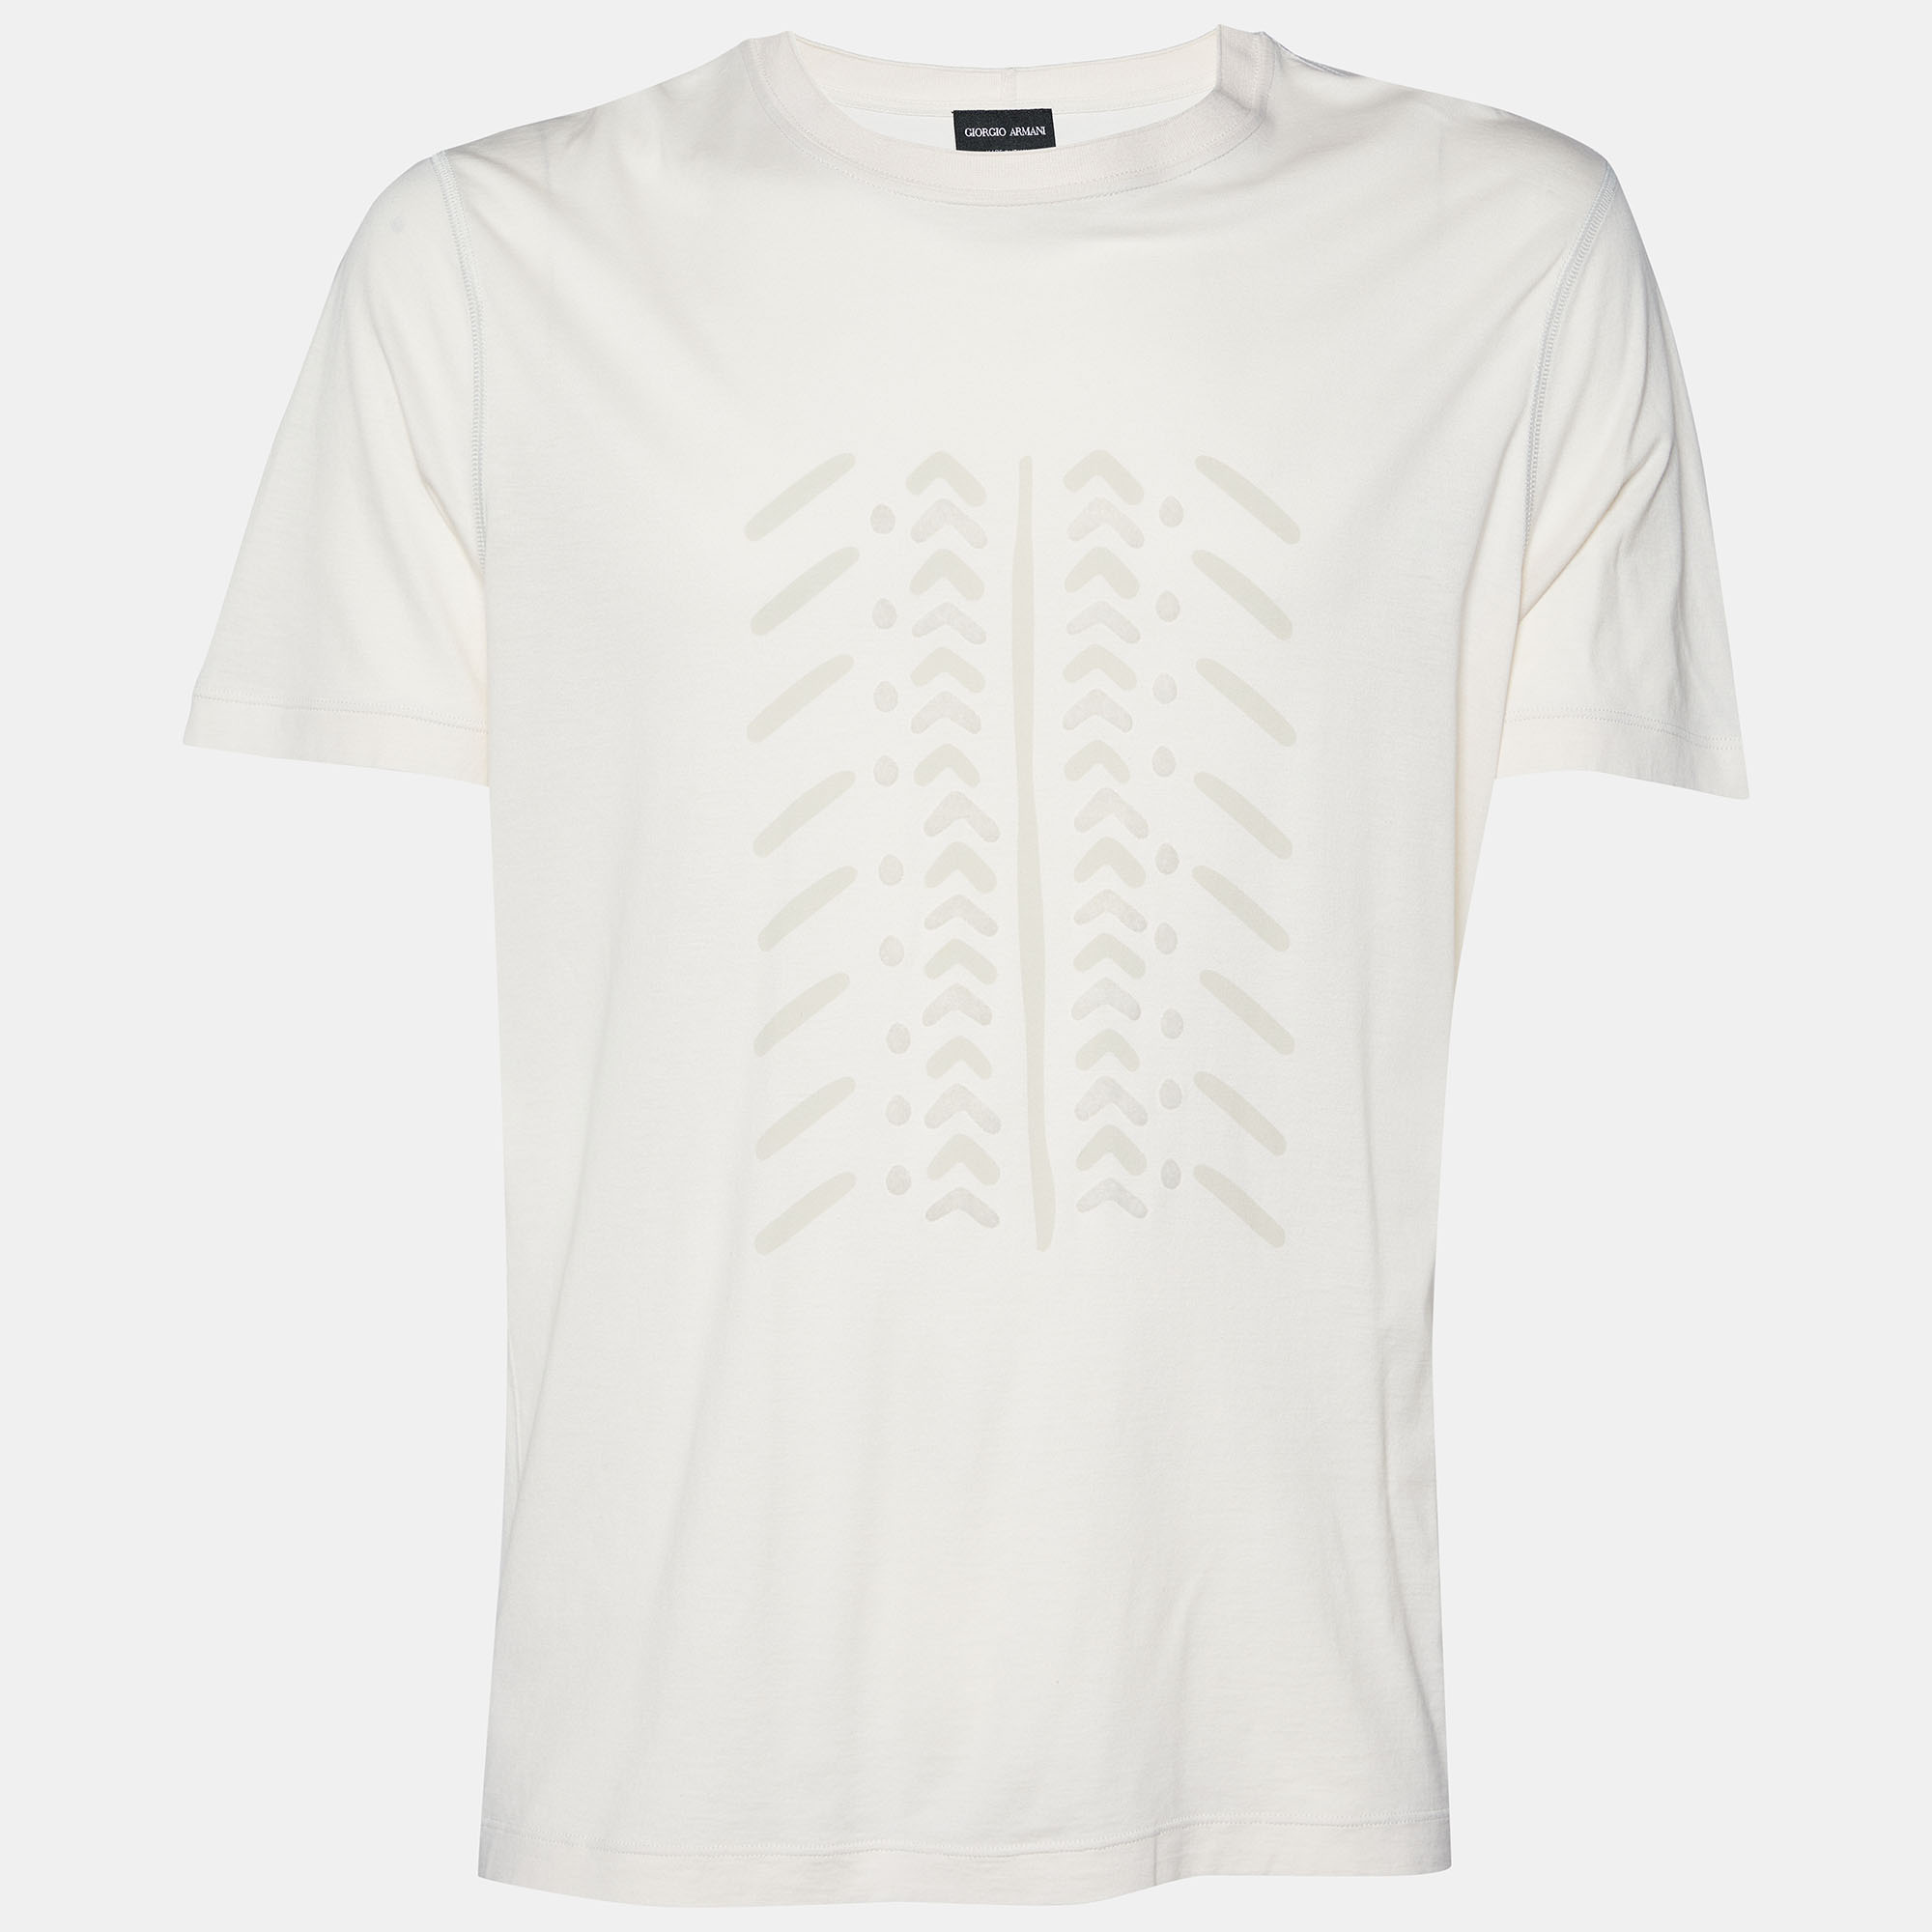 Giorgio Armani Cream Printed Cotton Knit T-Shirt 3XL